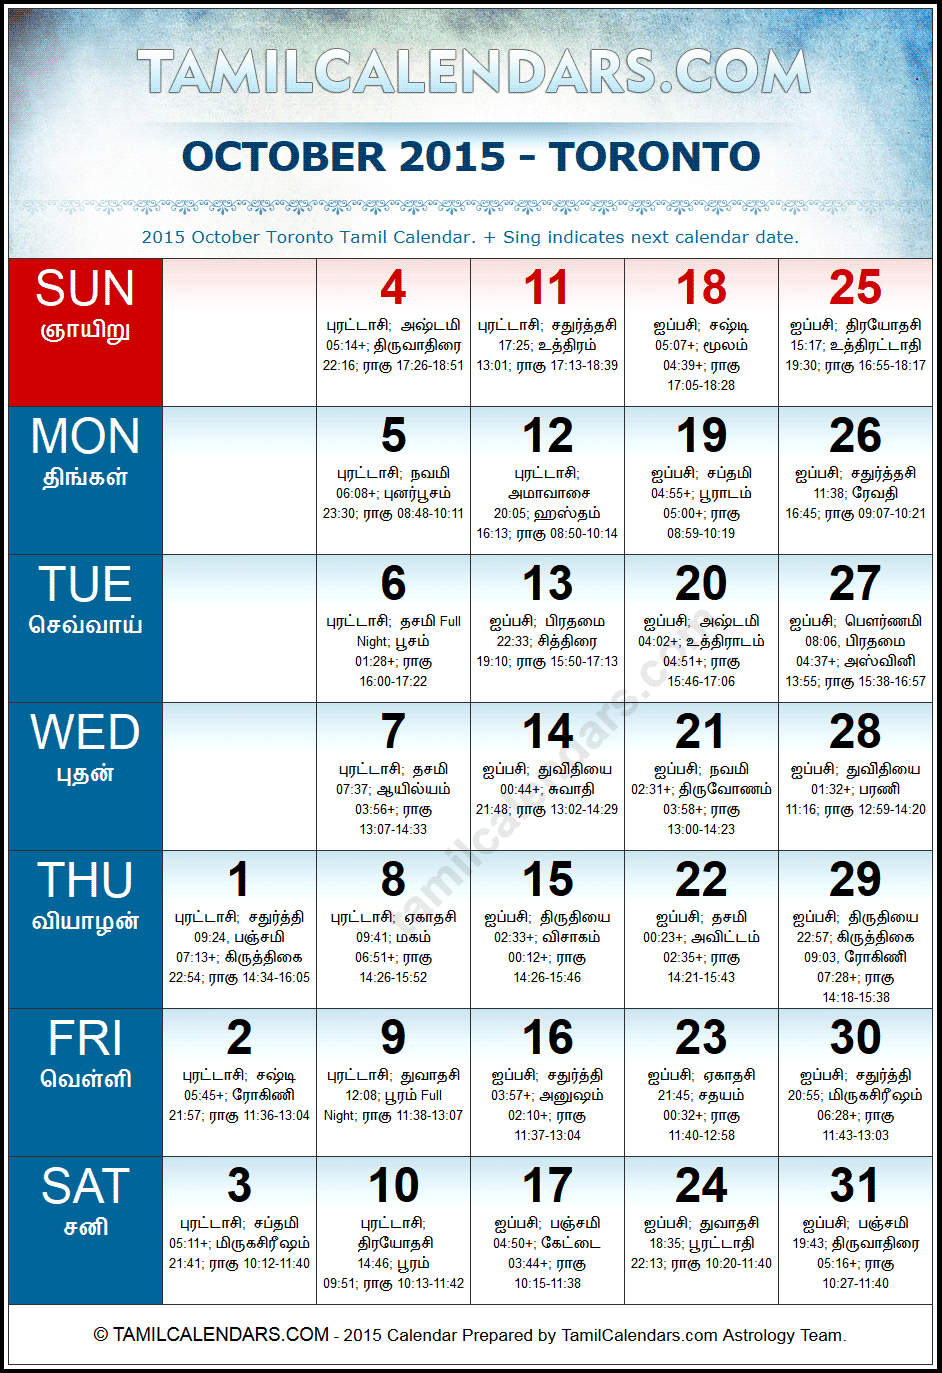 October 2015 Tamil Calendar for Toronto, Canada